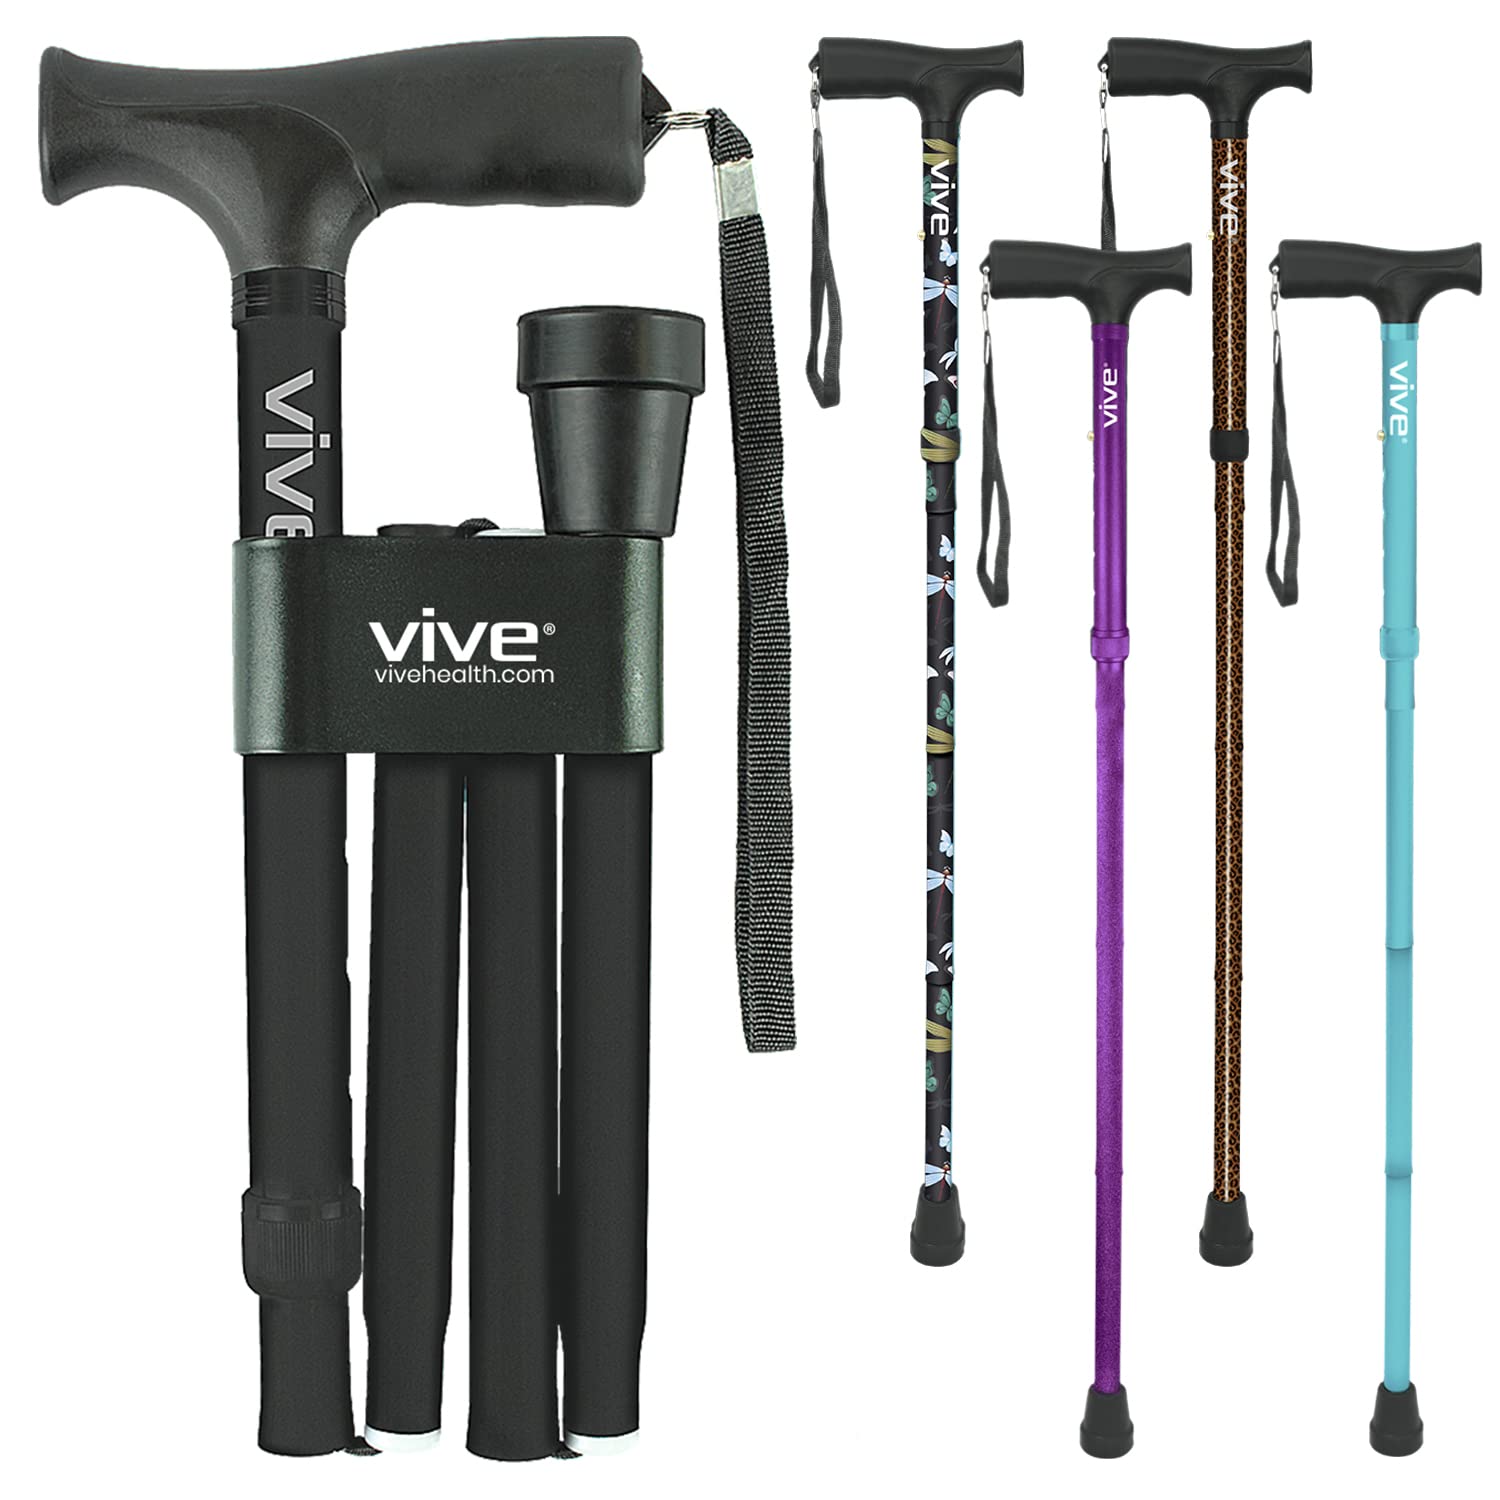 Vive Folding Cane - Foldable Walking Cane for Men, Women - Fold-up